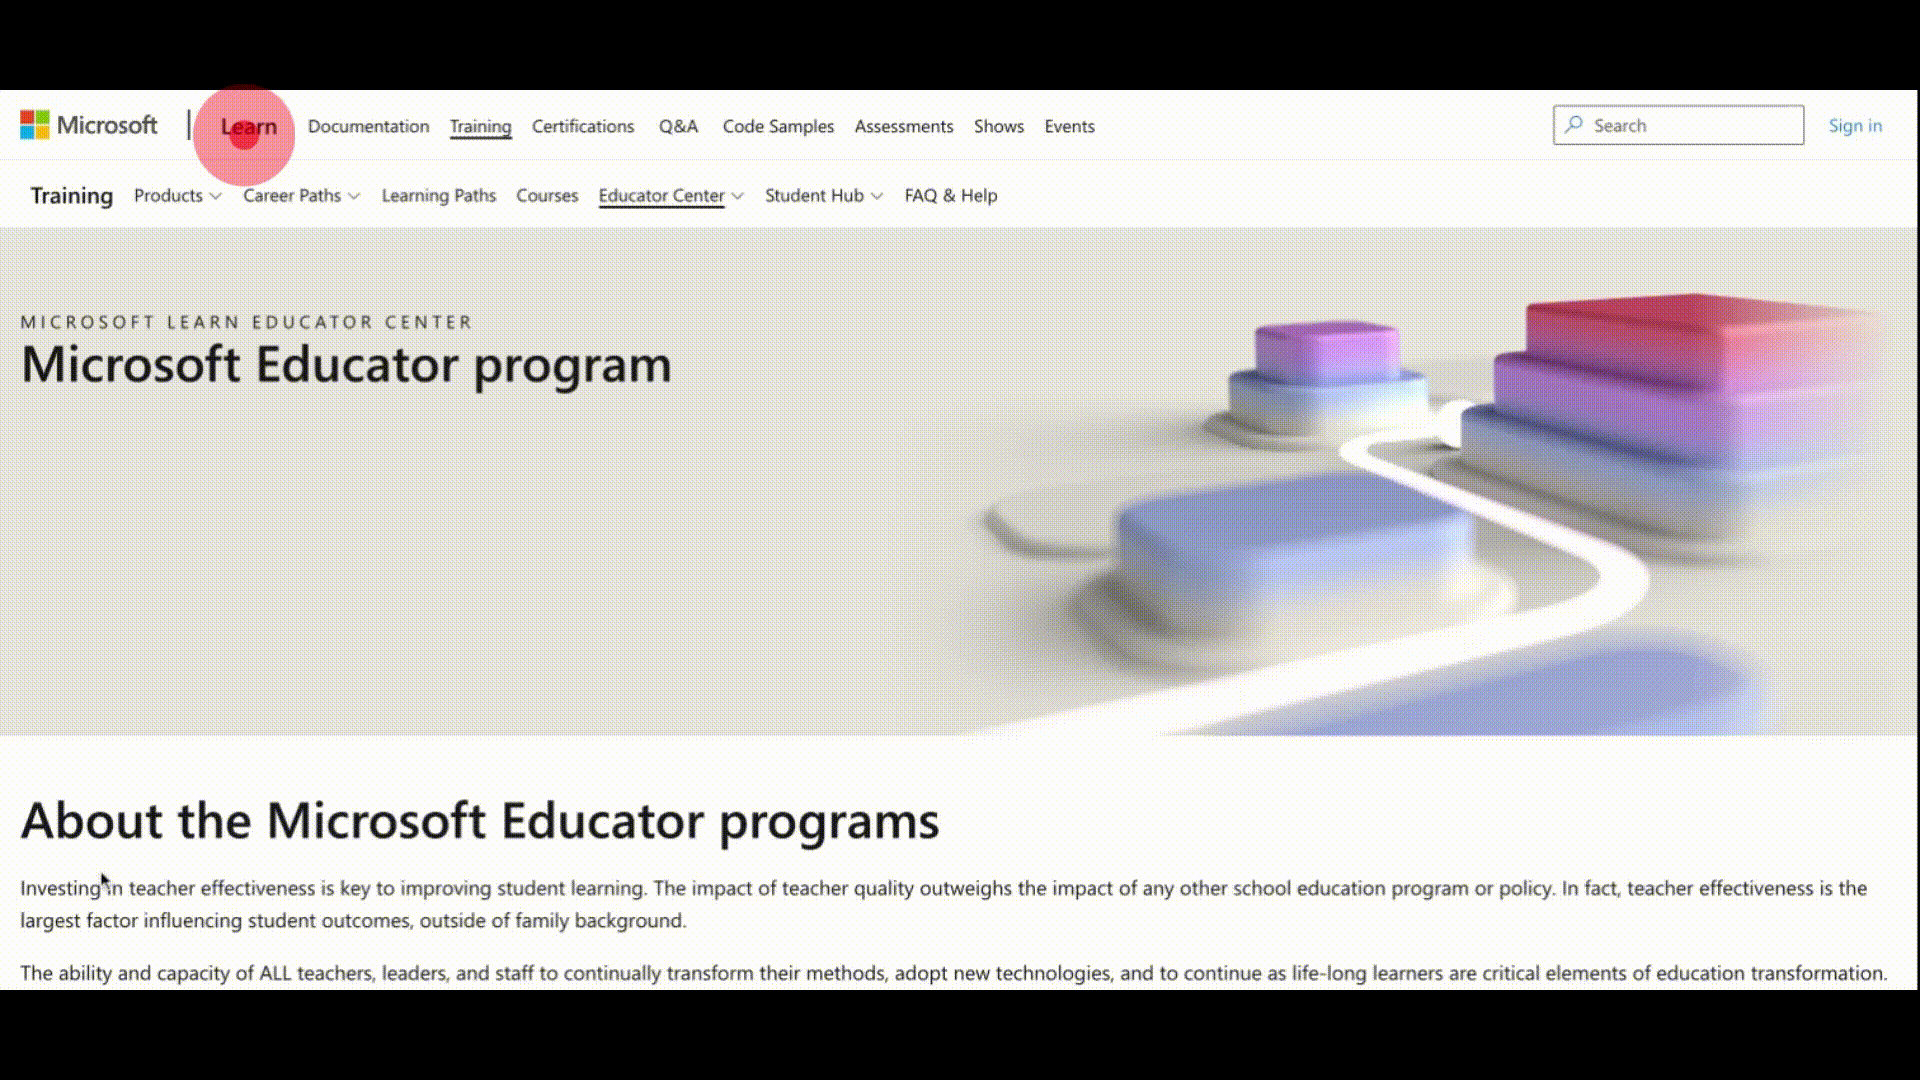 User interface of Microsoft Educator programs